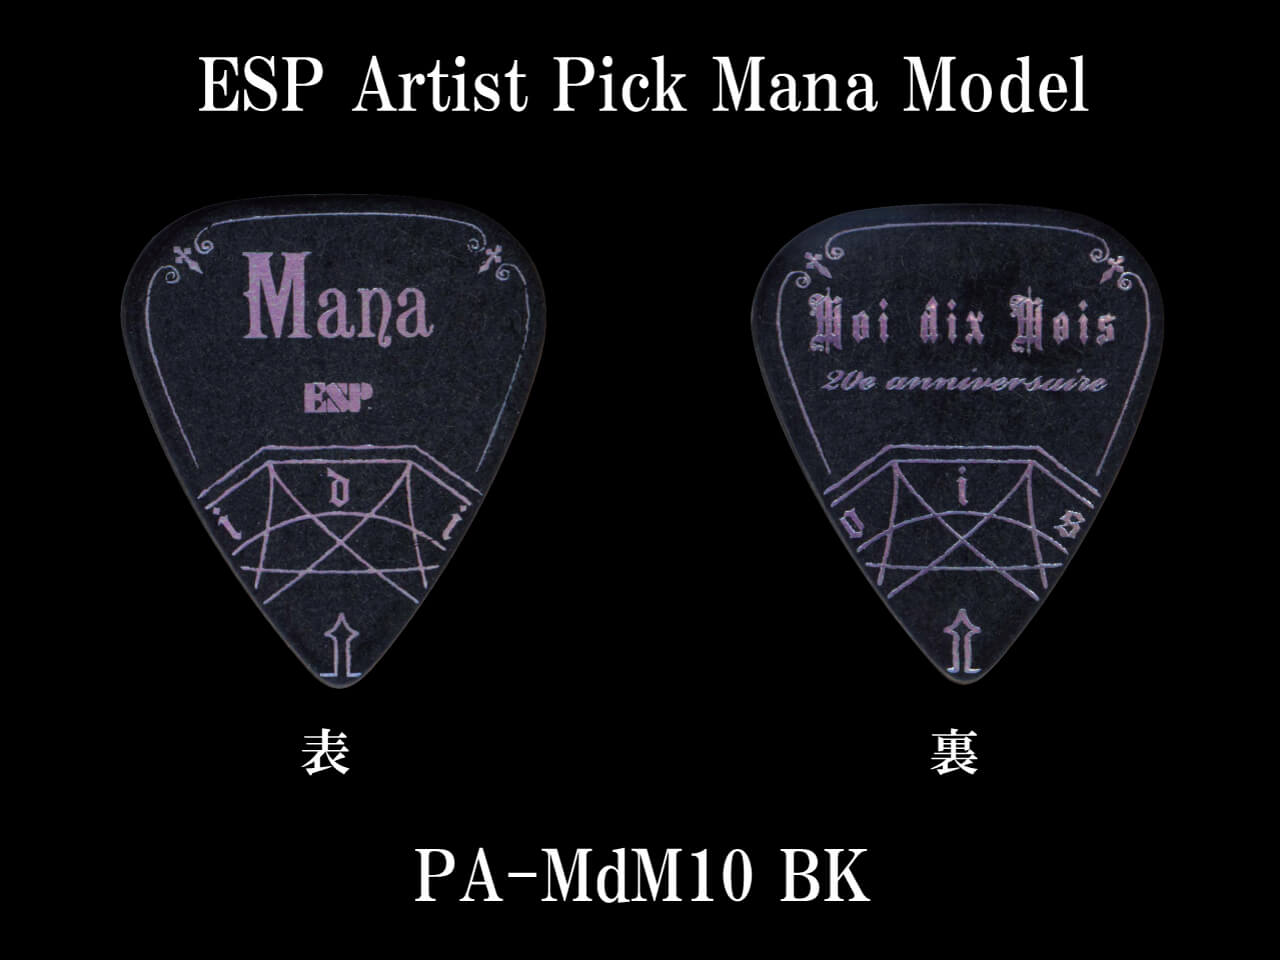 ESP Artist Pick Series PA-MdM10 BK<br>(Moi dix Mois/MANAモデル)(イーエスピー)